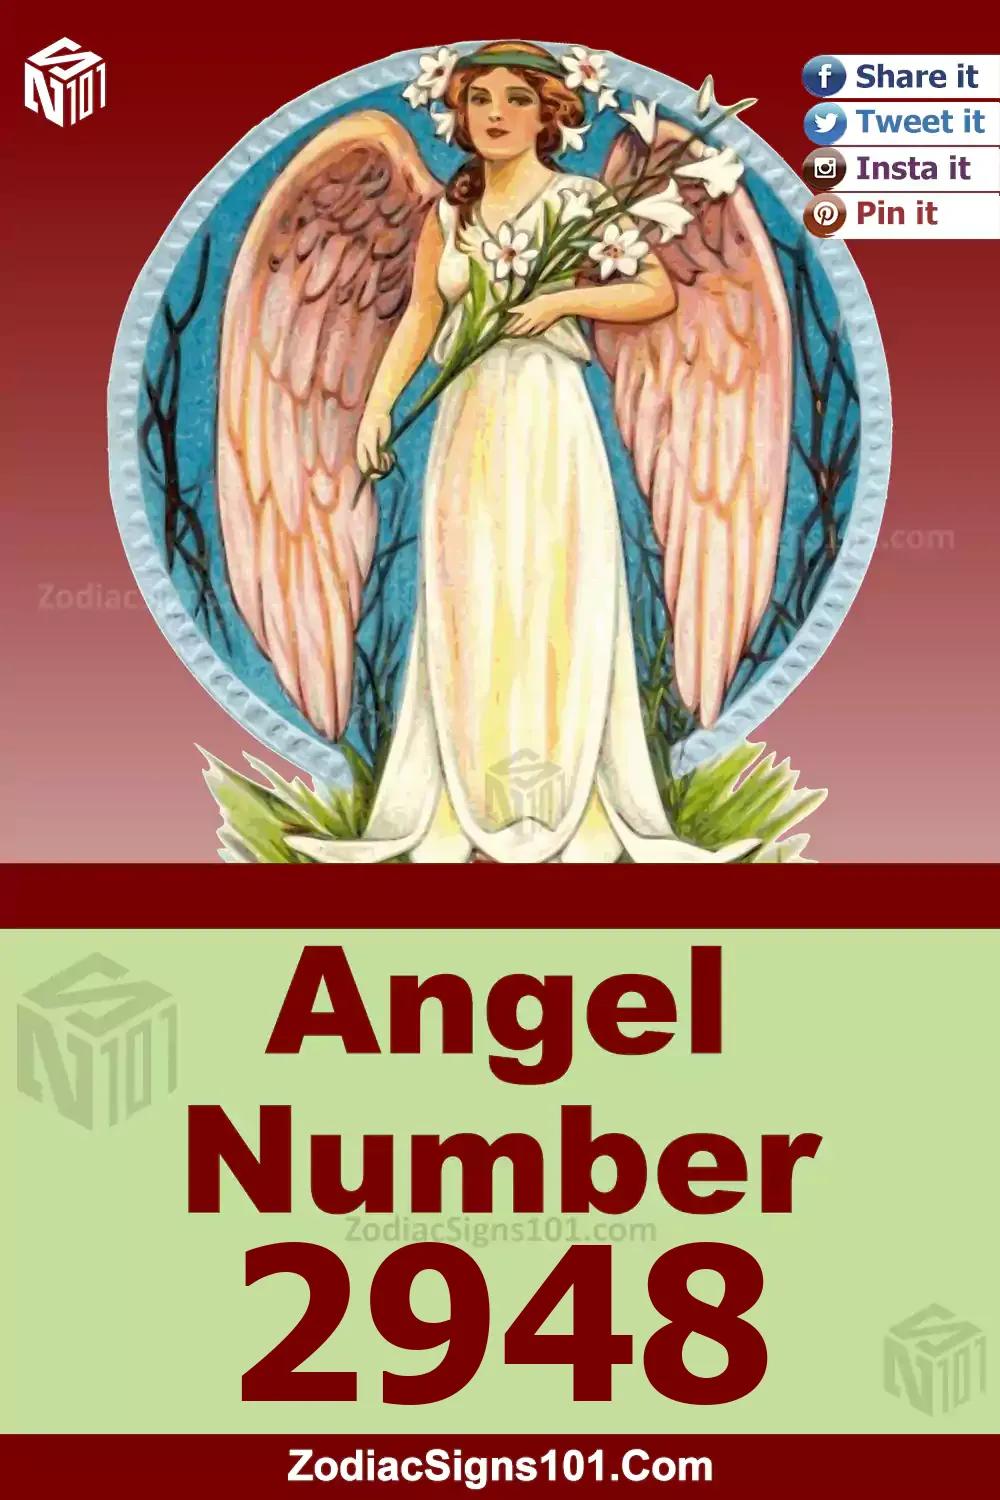 2948-Angel-Number-Meaning.jpg